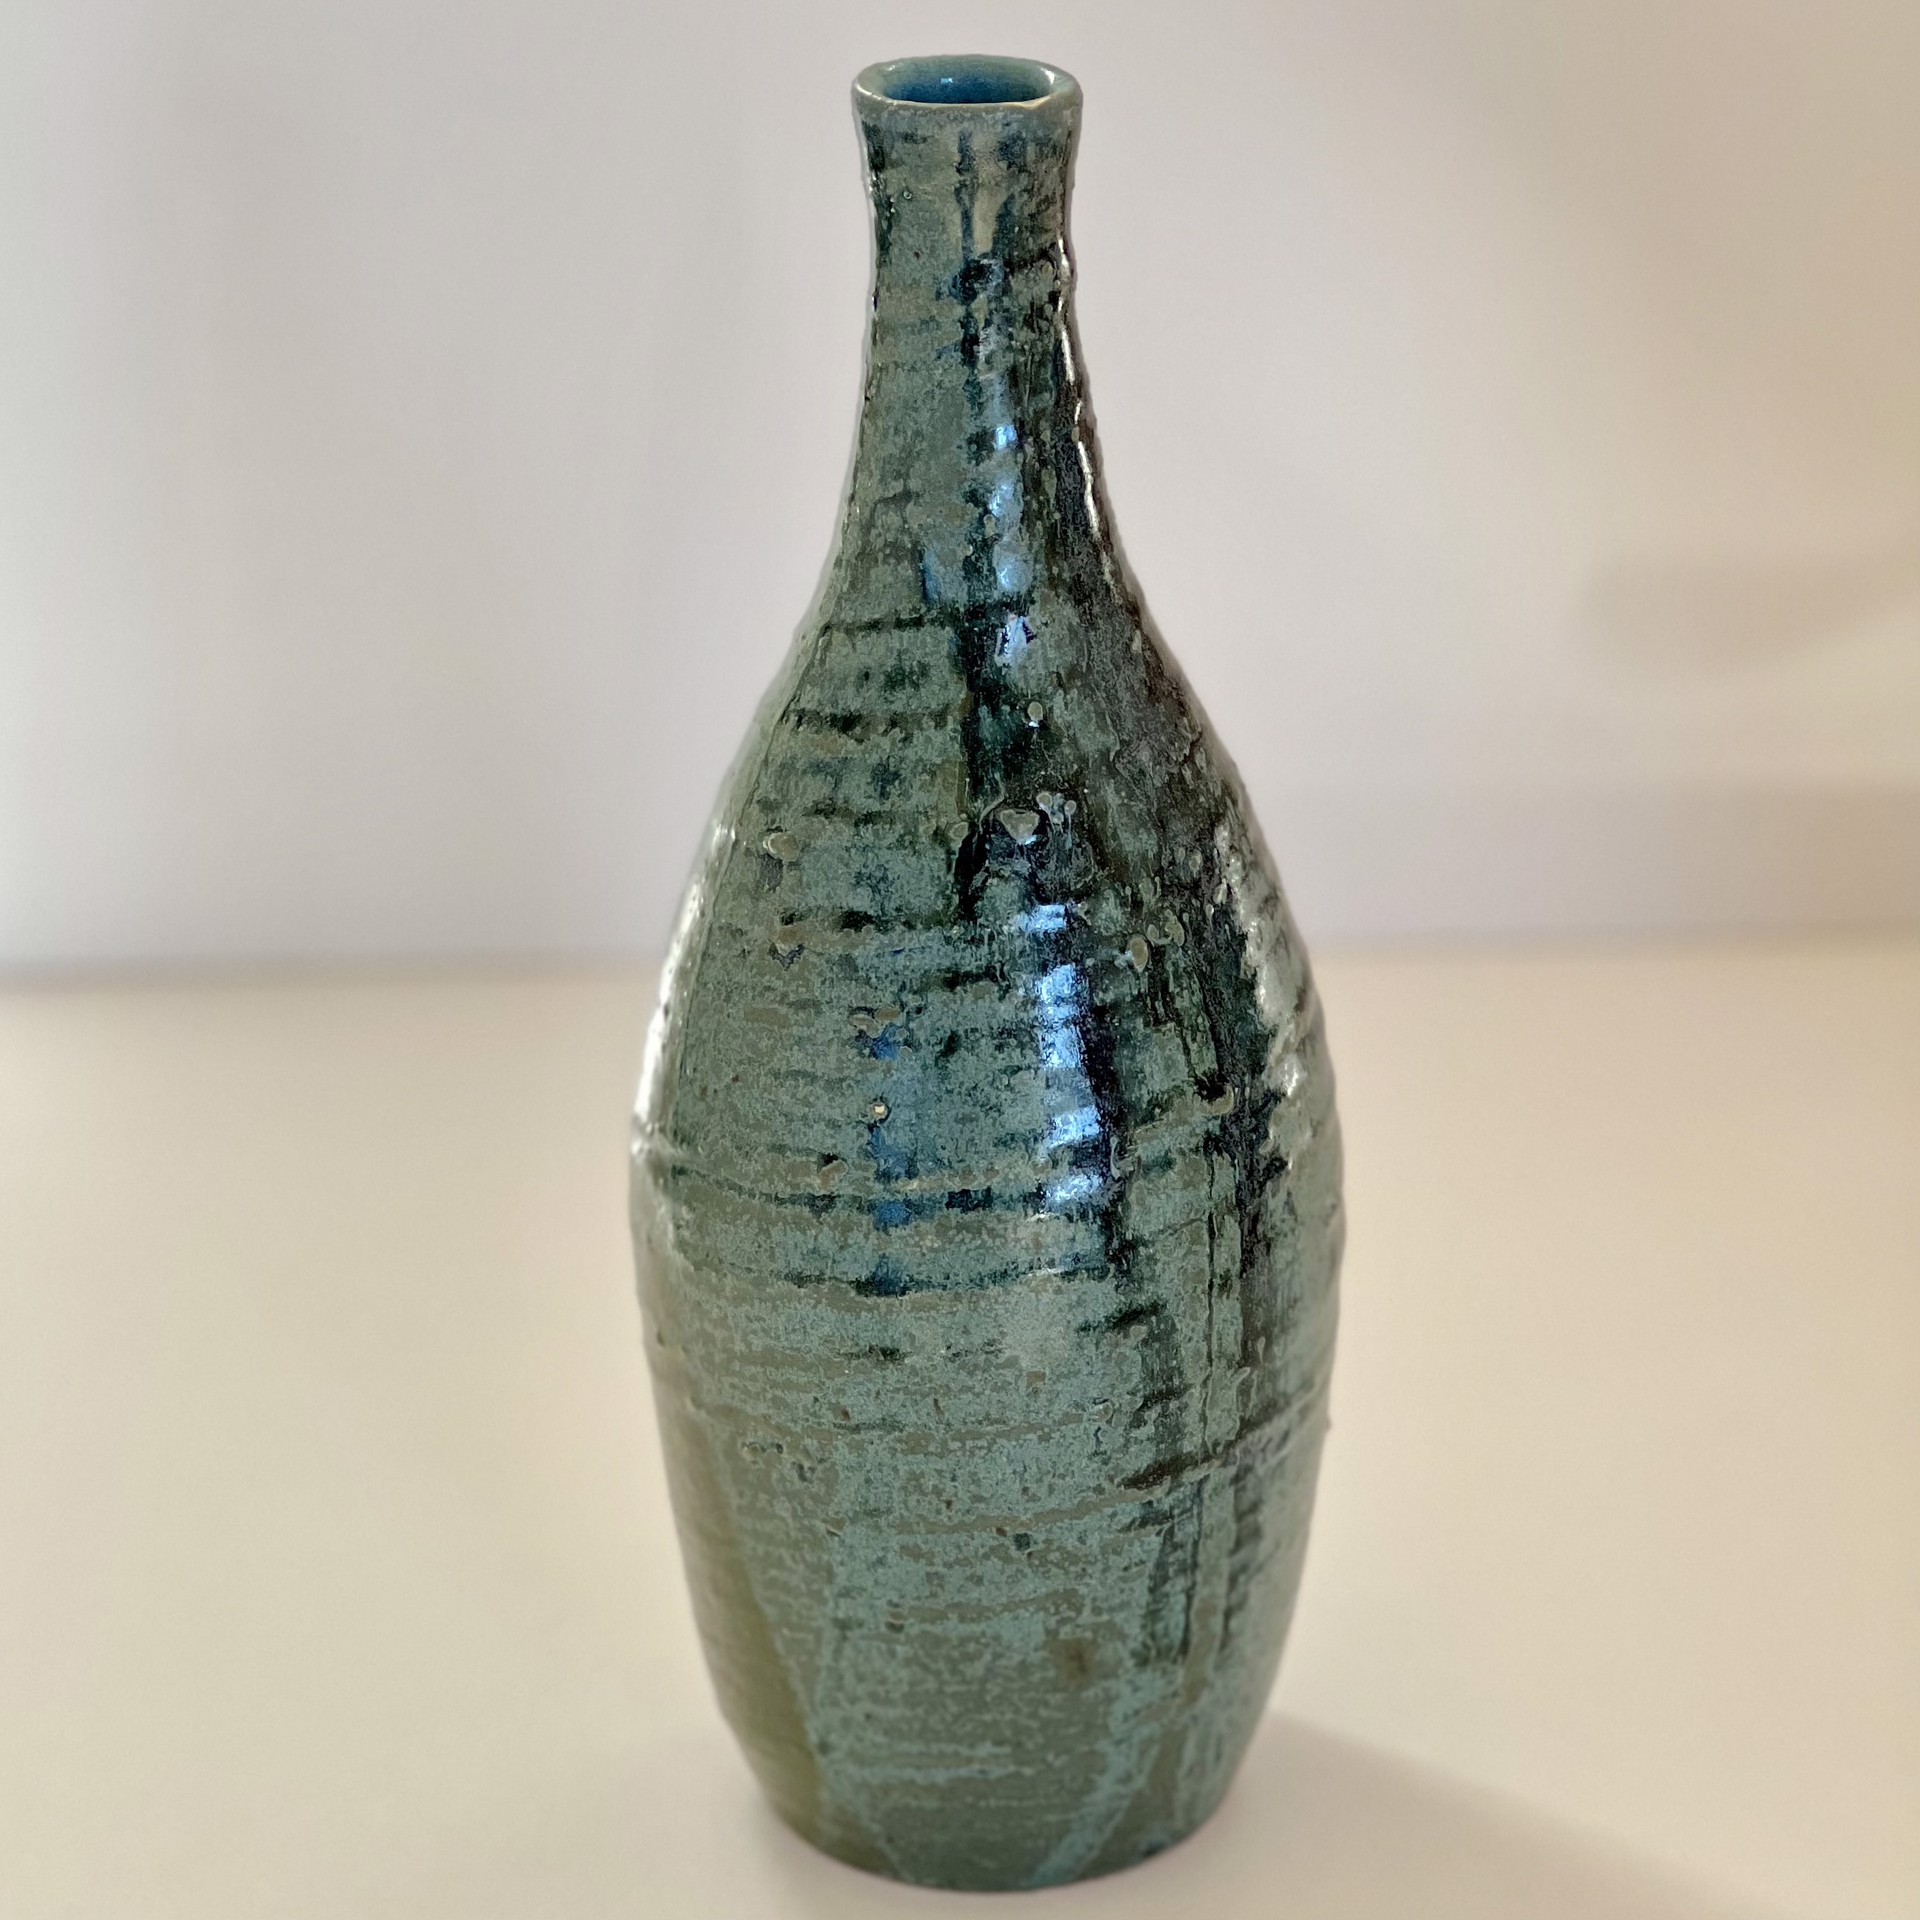 Vase 13 by David LaLomia